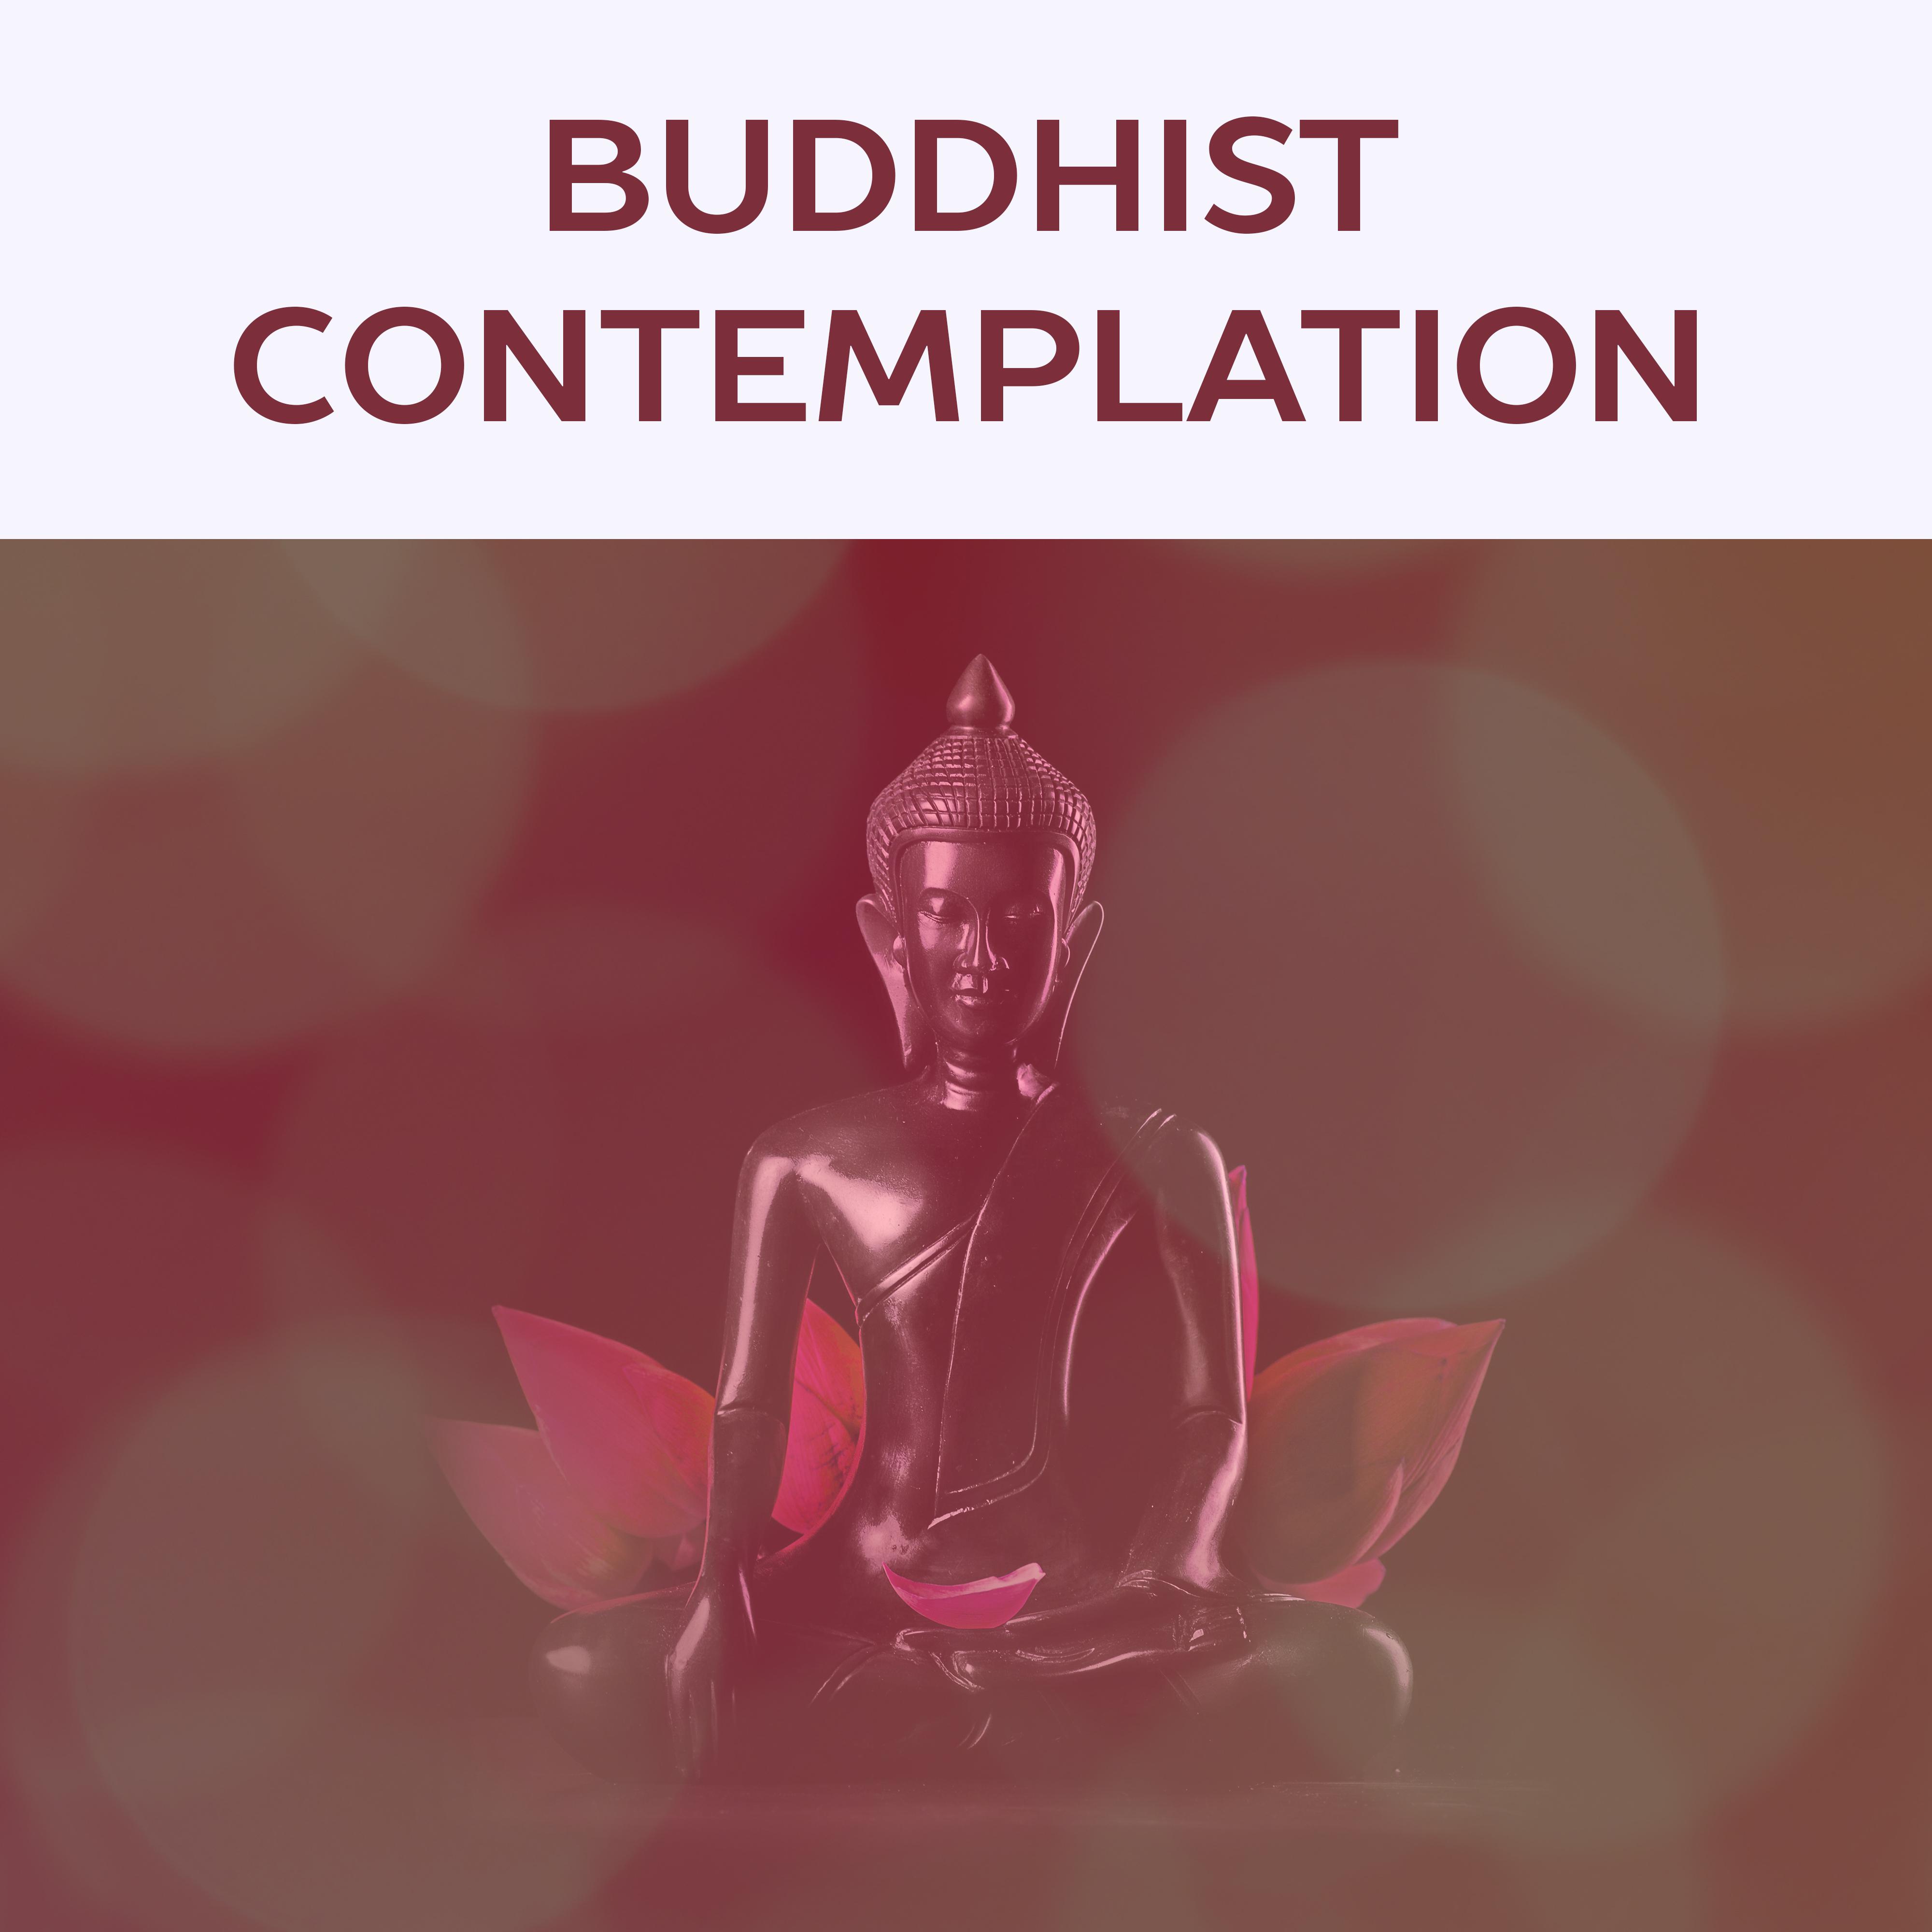 Buddhist Contemplation – Meditation Music, Yoga Sounds, Deep Focus, Calmness, Tibetan Music, Peaceful Mind, Better Concentration